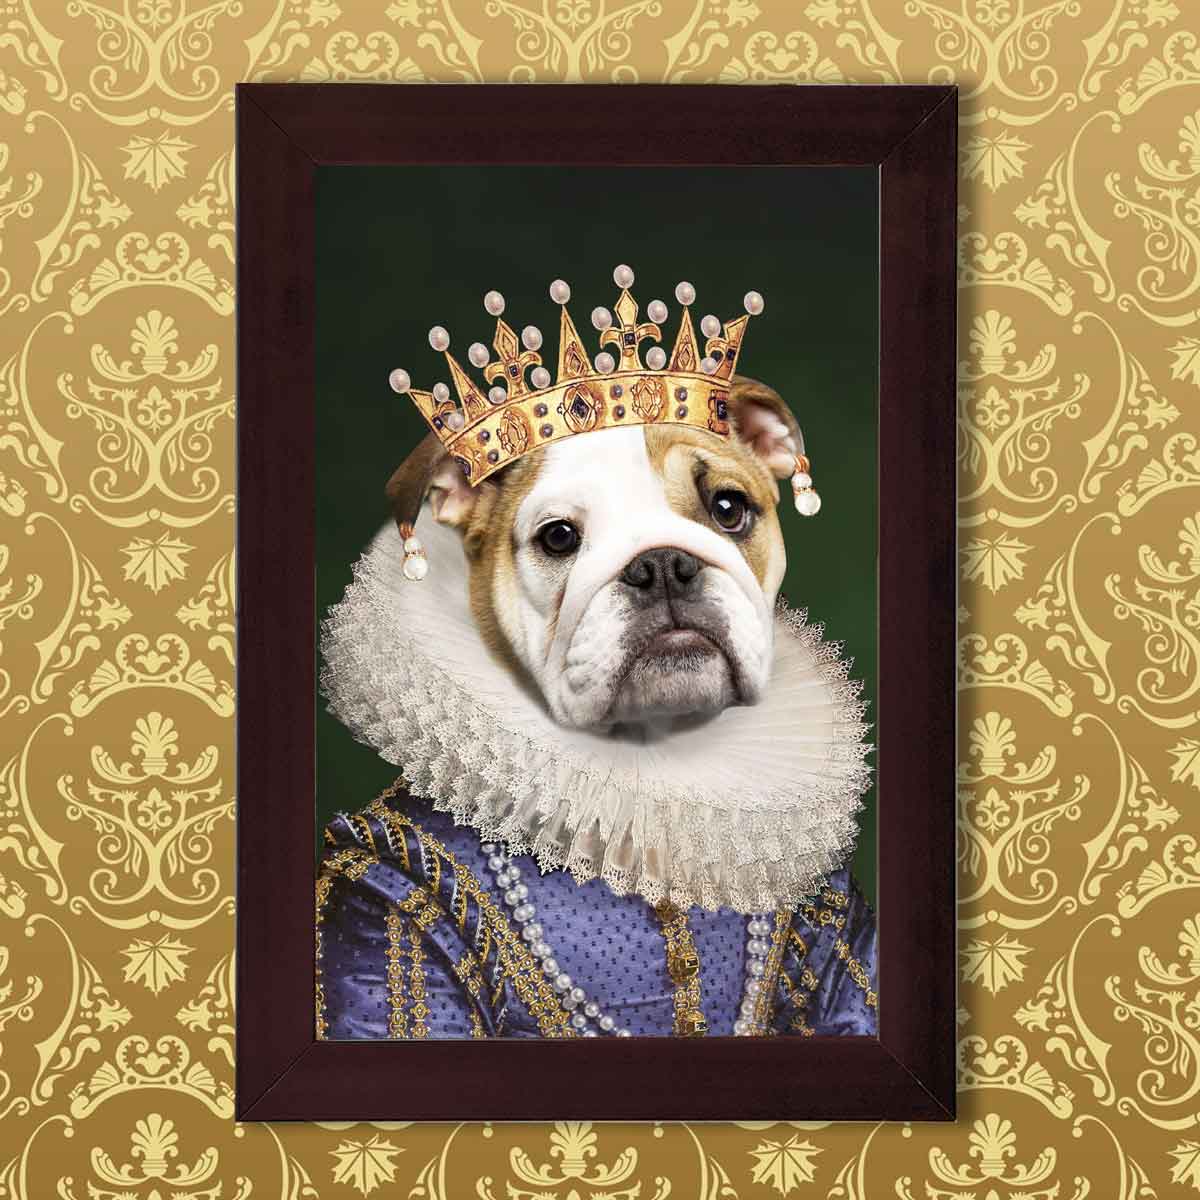 The Royal King Pet Digital Portrait Photo Frame